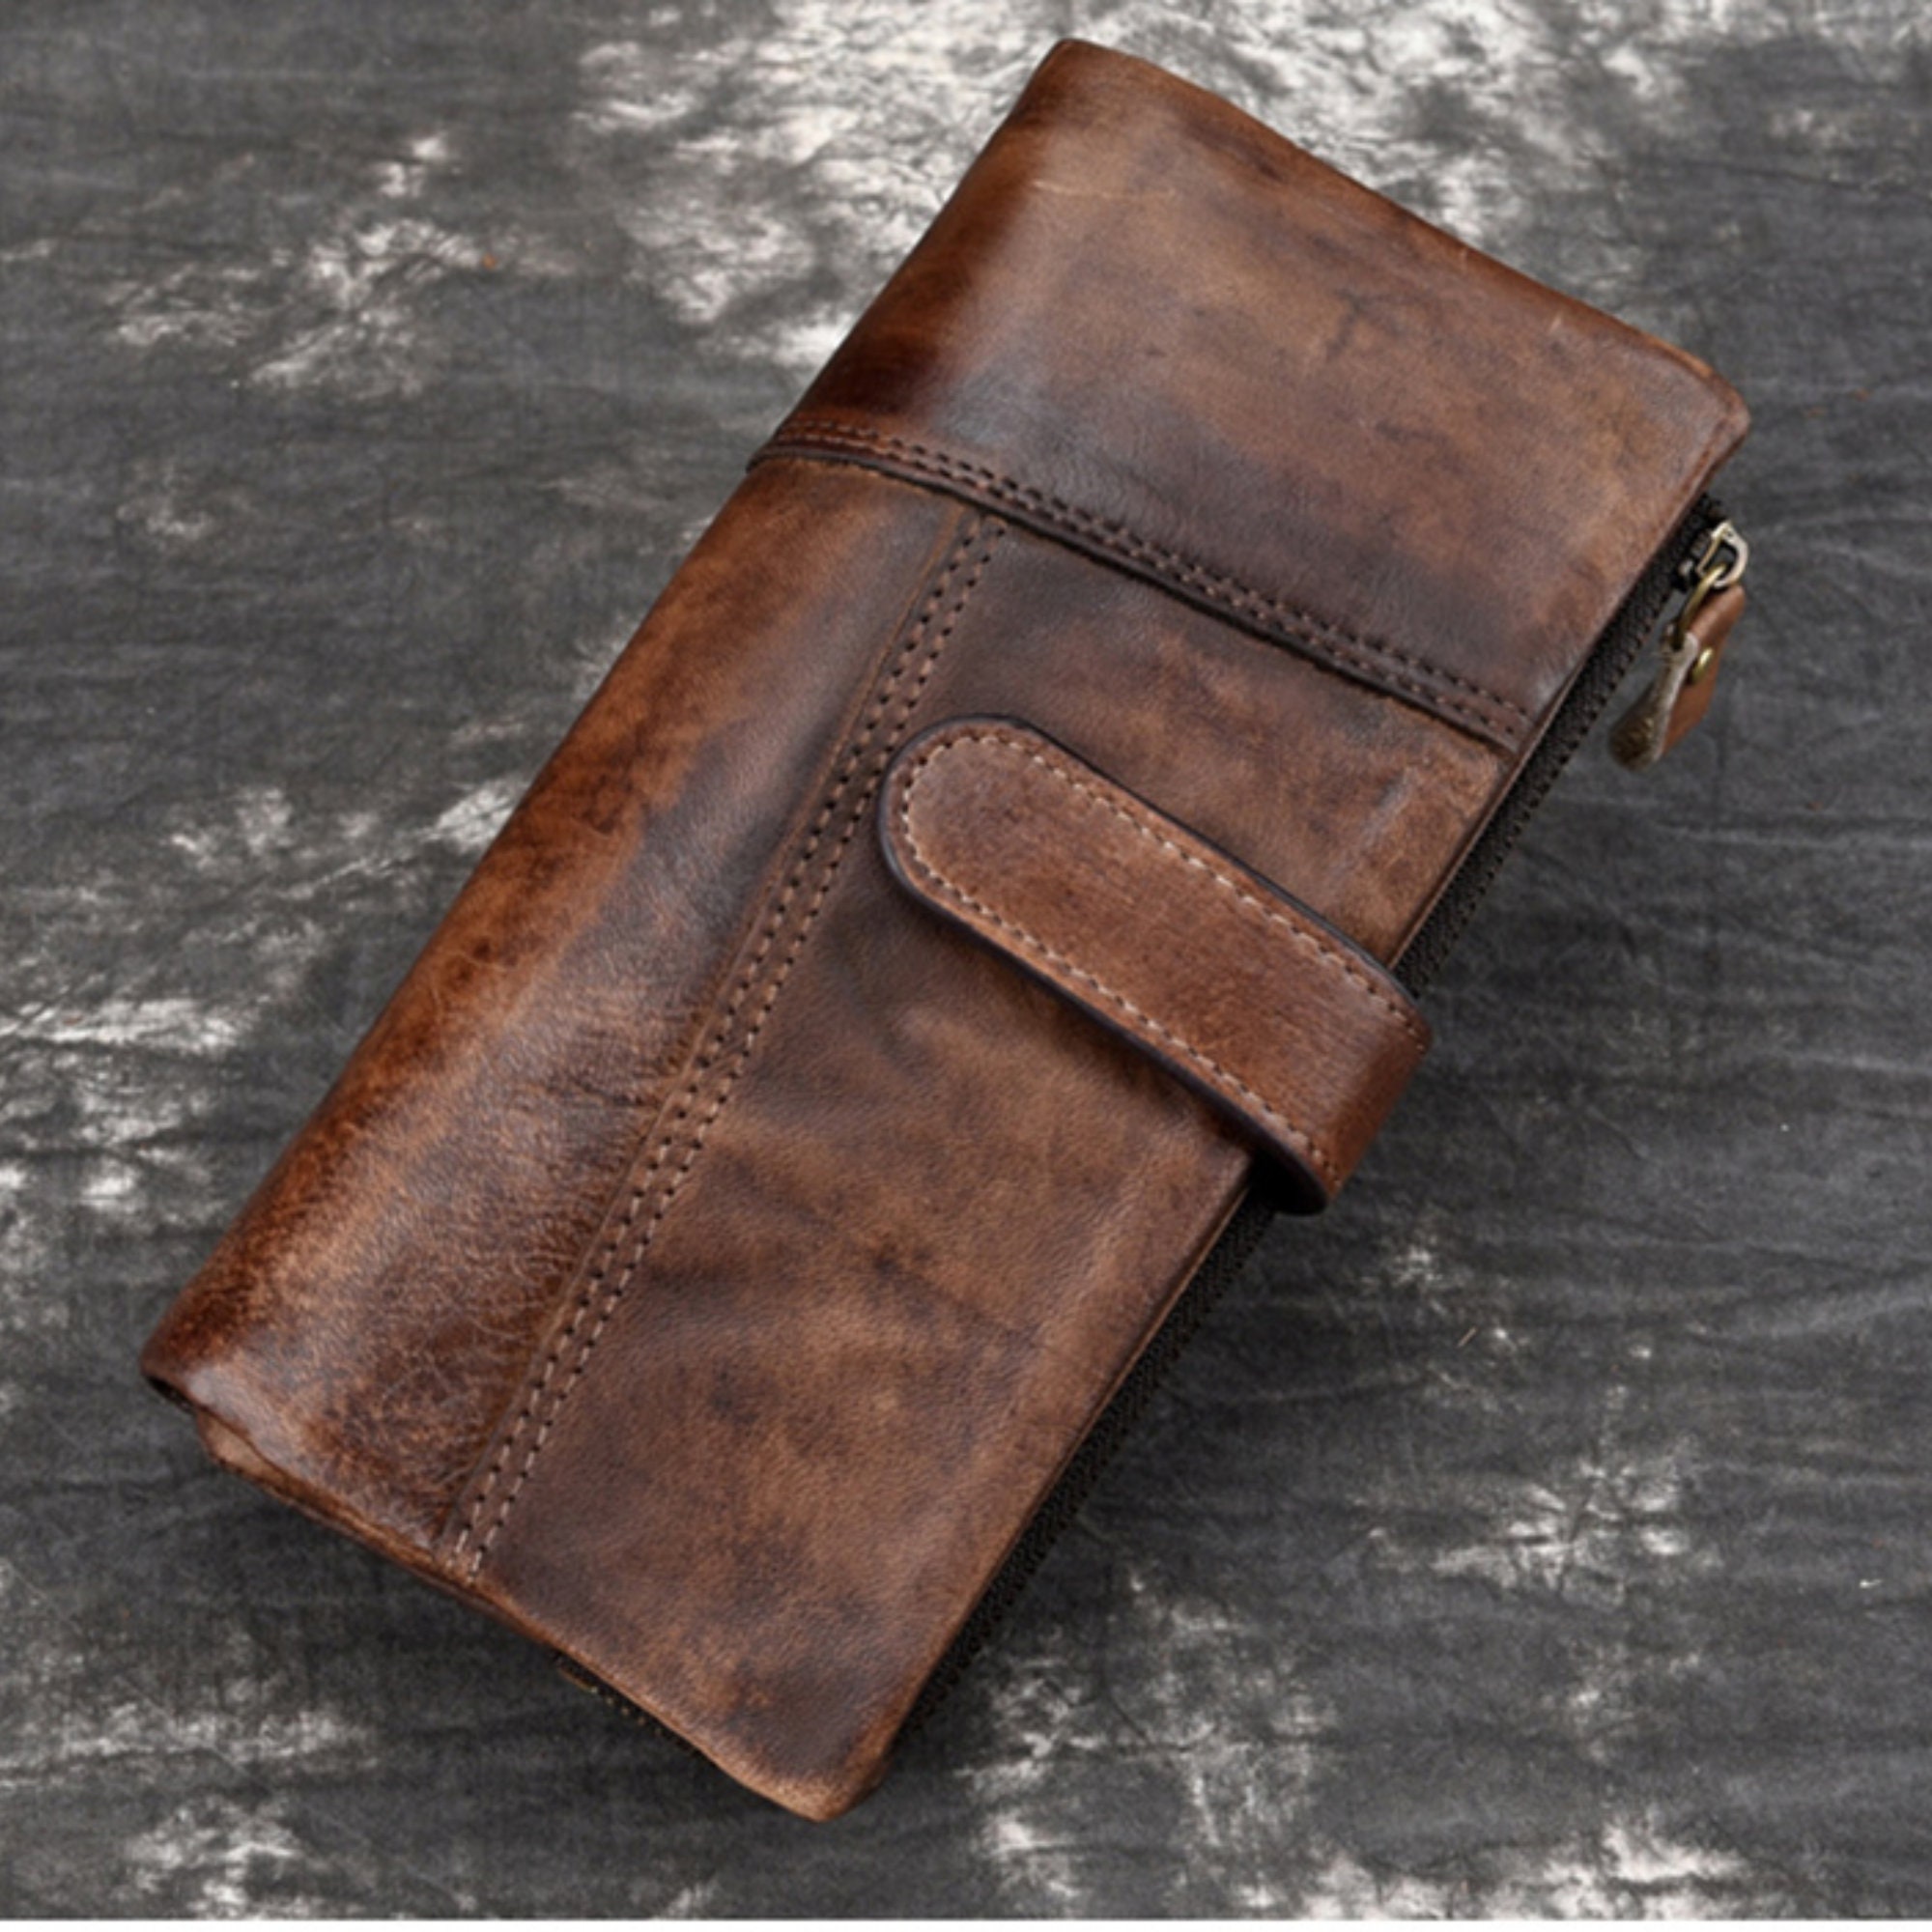 Embossed Designer Men Luxury Brand Genuine Leather Wallet Clutch